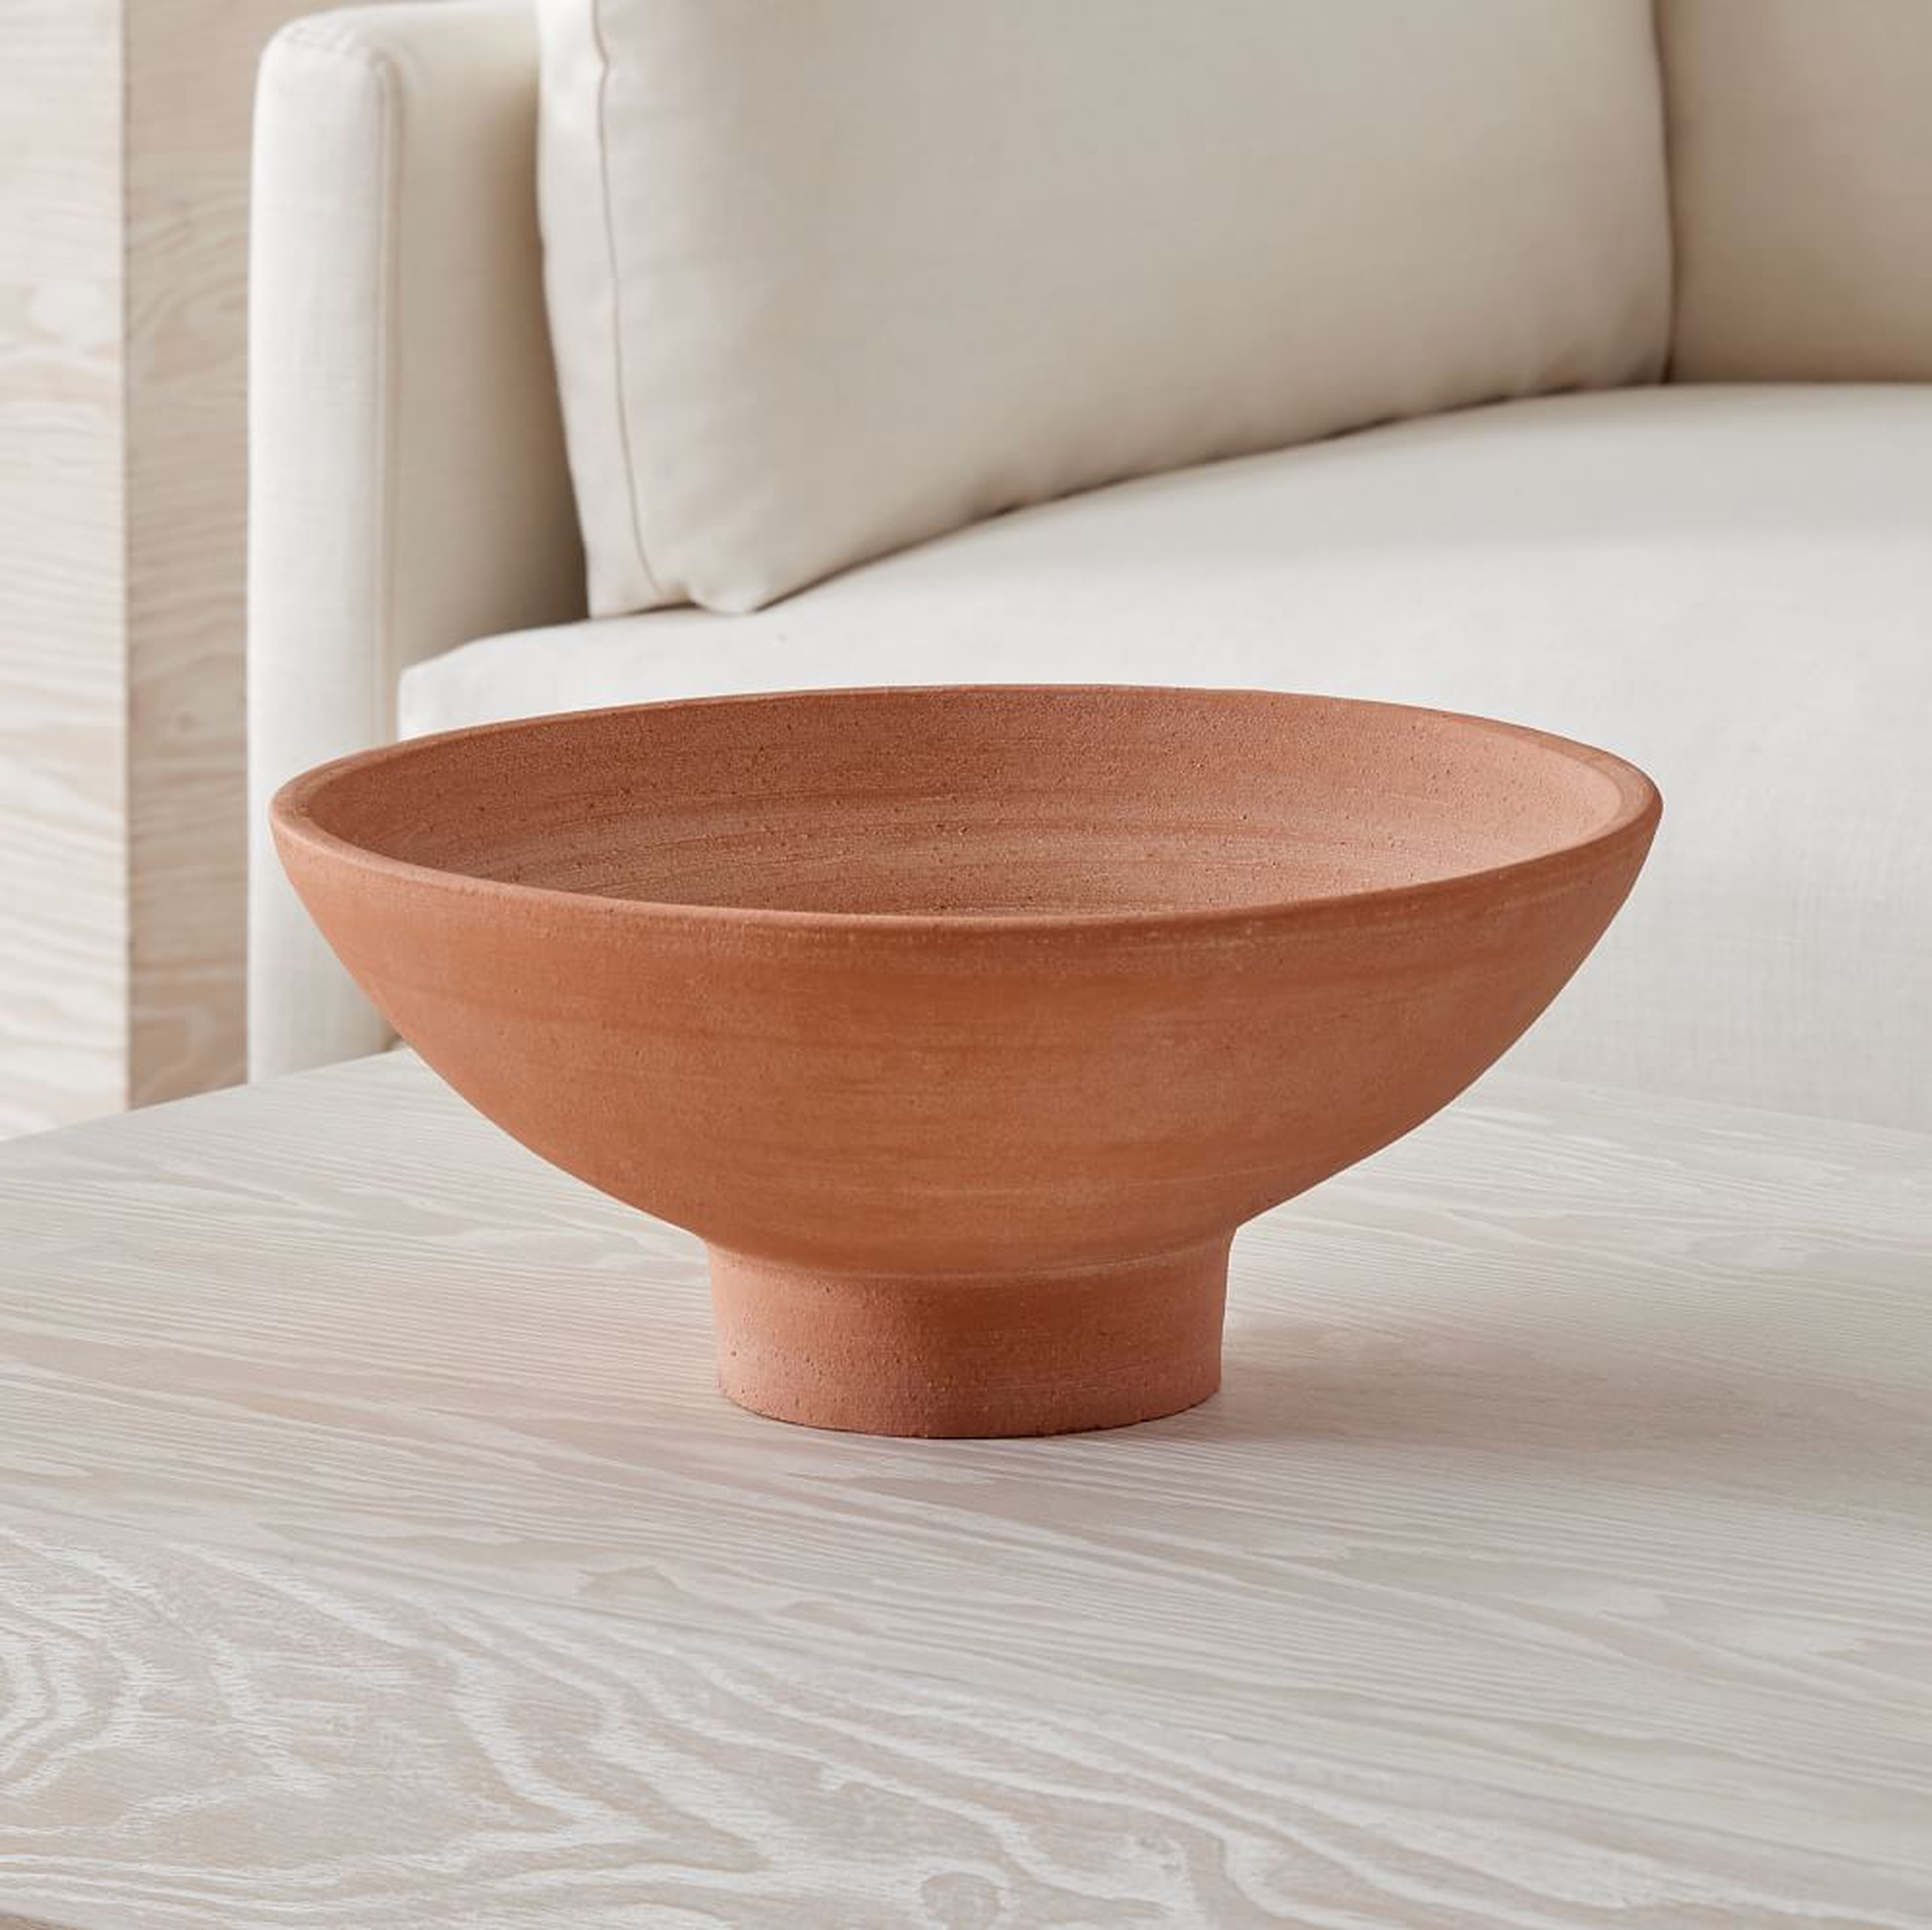 Atuto Terracotta Centerpiece Bowl, Centerpiece, Terracotta, Earthenware, 15.5 Inches - West Elm